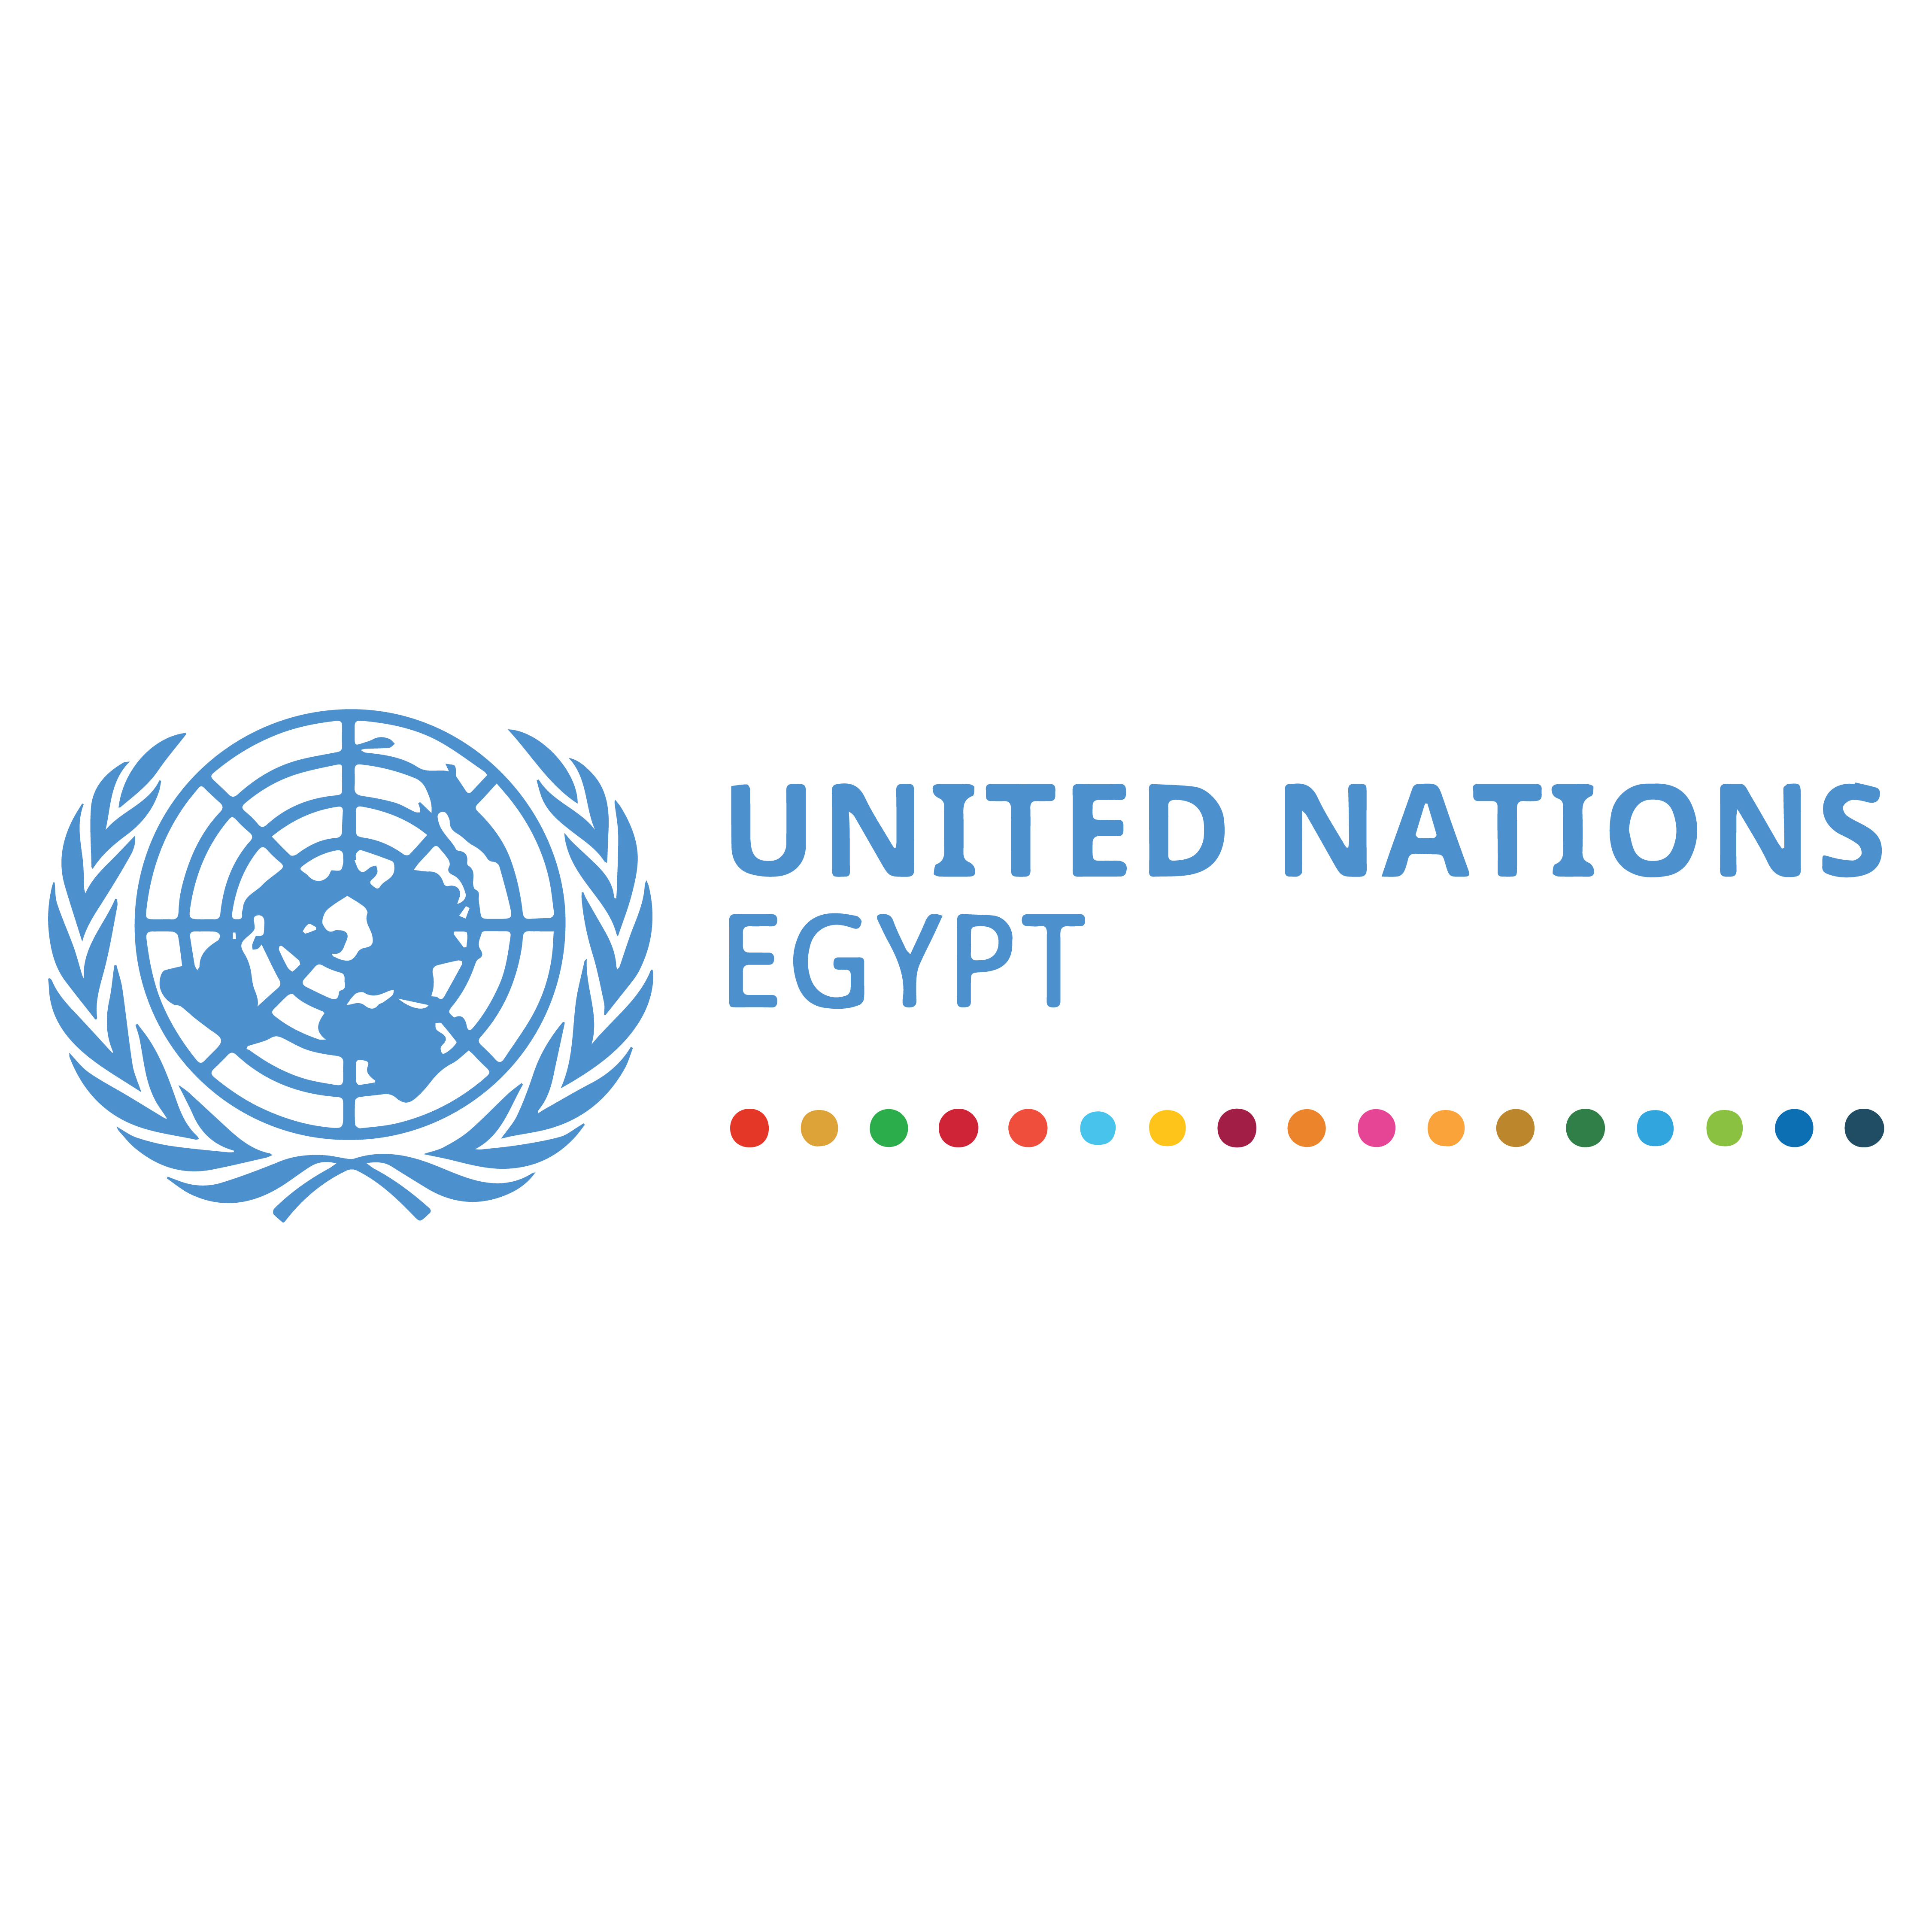 Copy of UN in egypt Logo